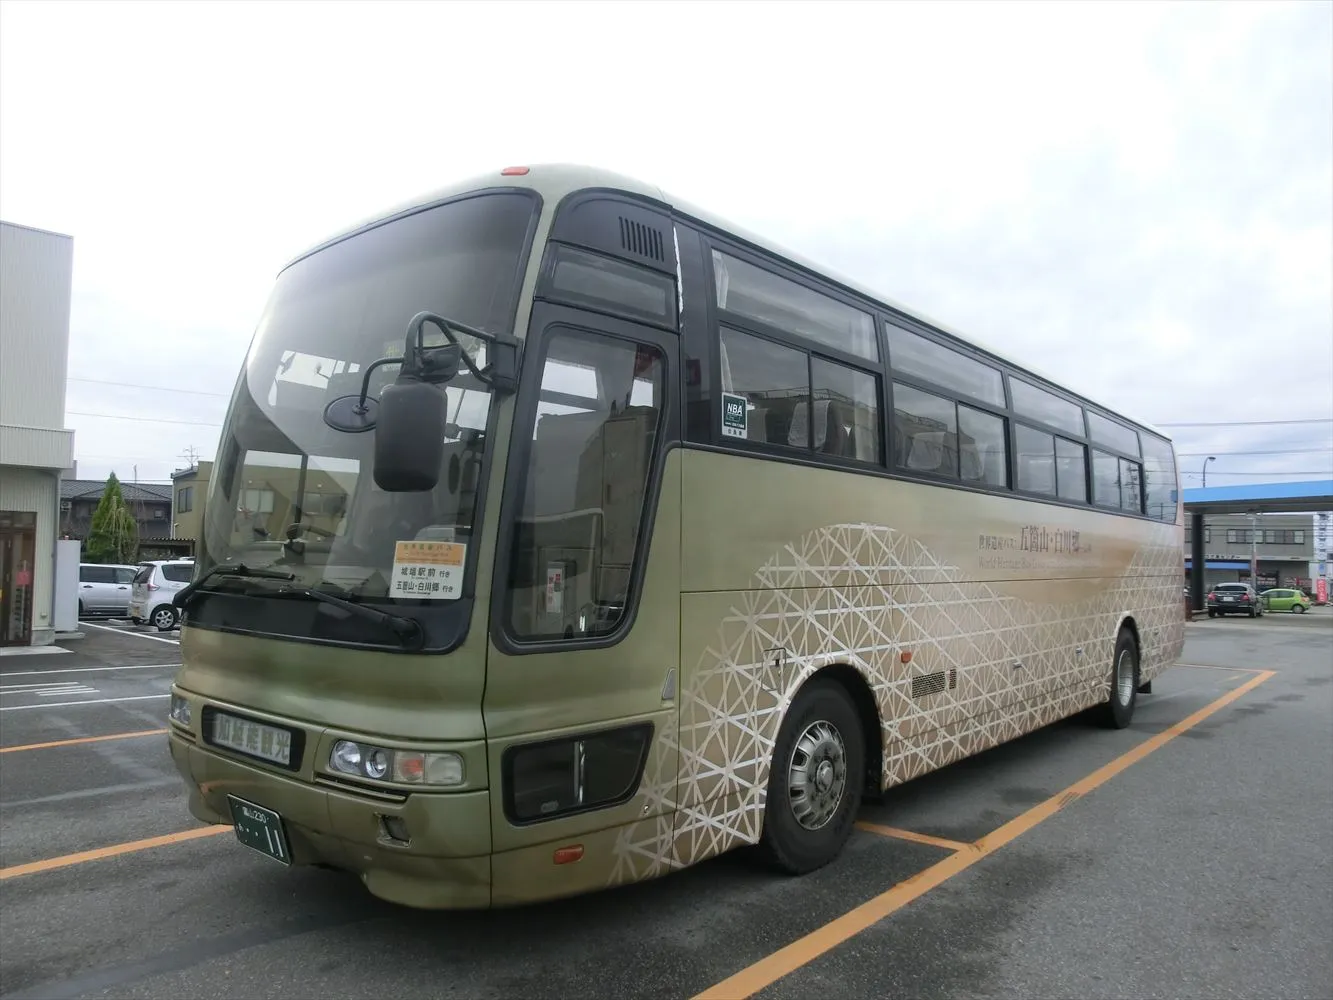 World Heritage Bus